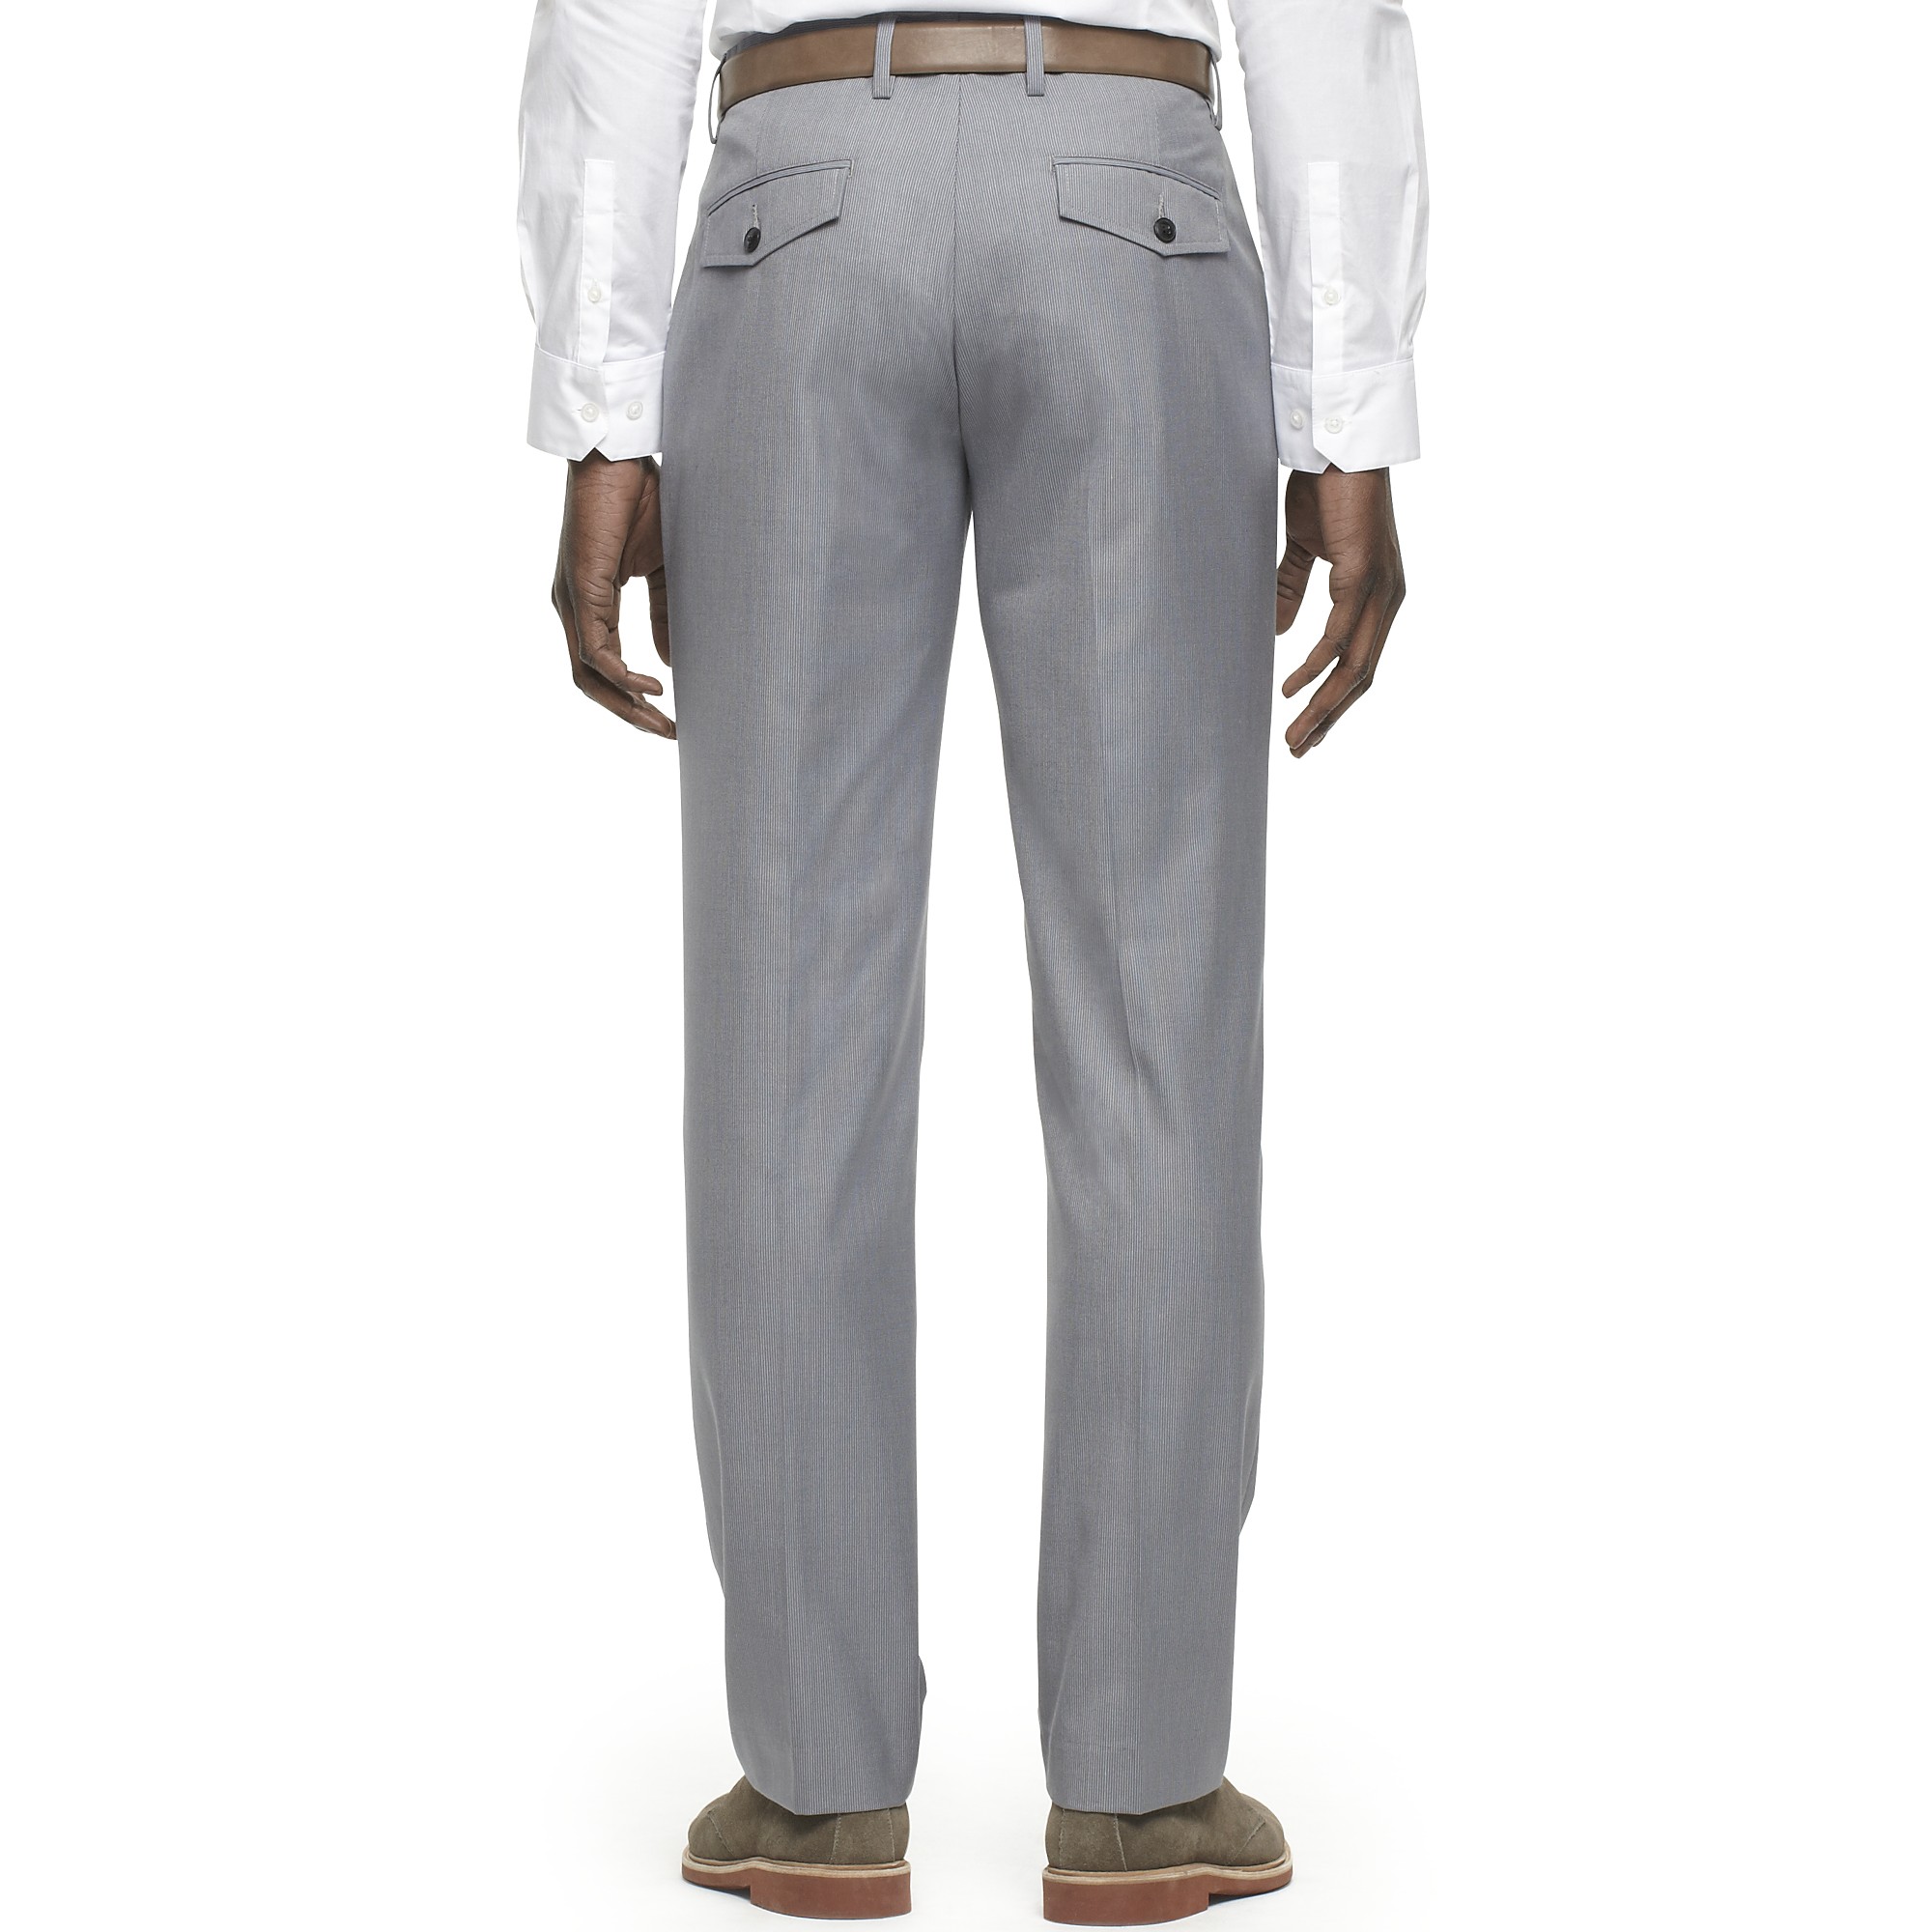 Lyst - Kenneth Cole Reaction Back Flap Pocket Pants in Gray for Men